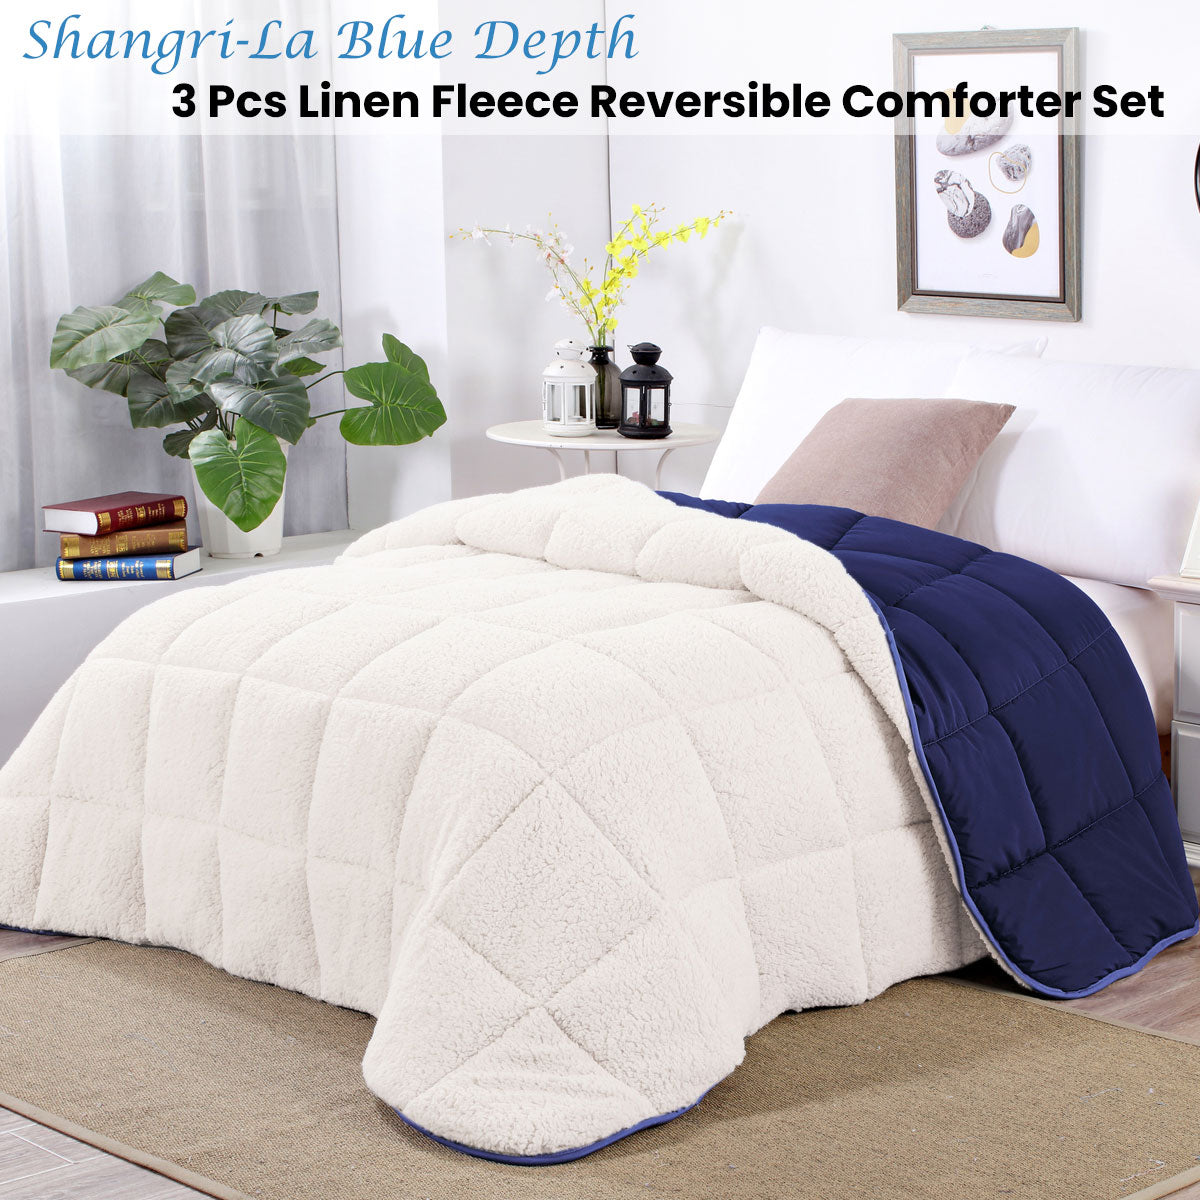 King Shangri La Blue Depth Sherpa Fleece Reversible 3 Pcs Comforter Set - White?blue